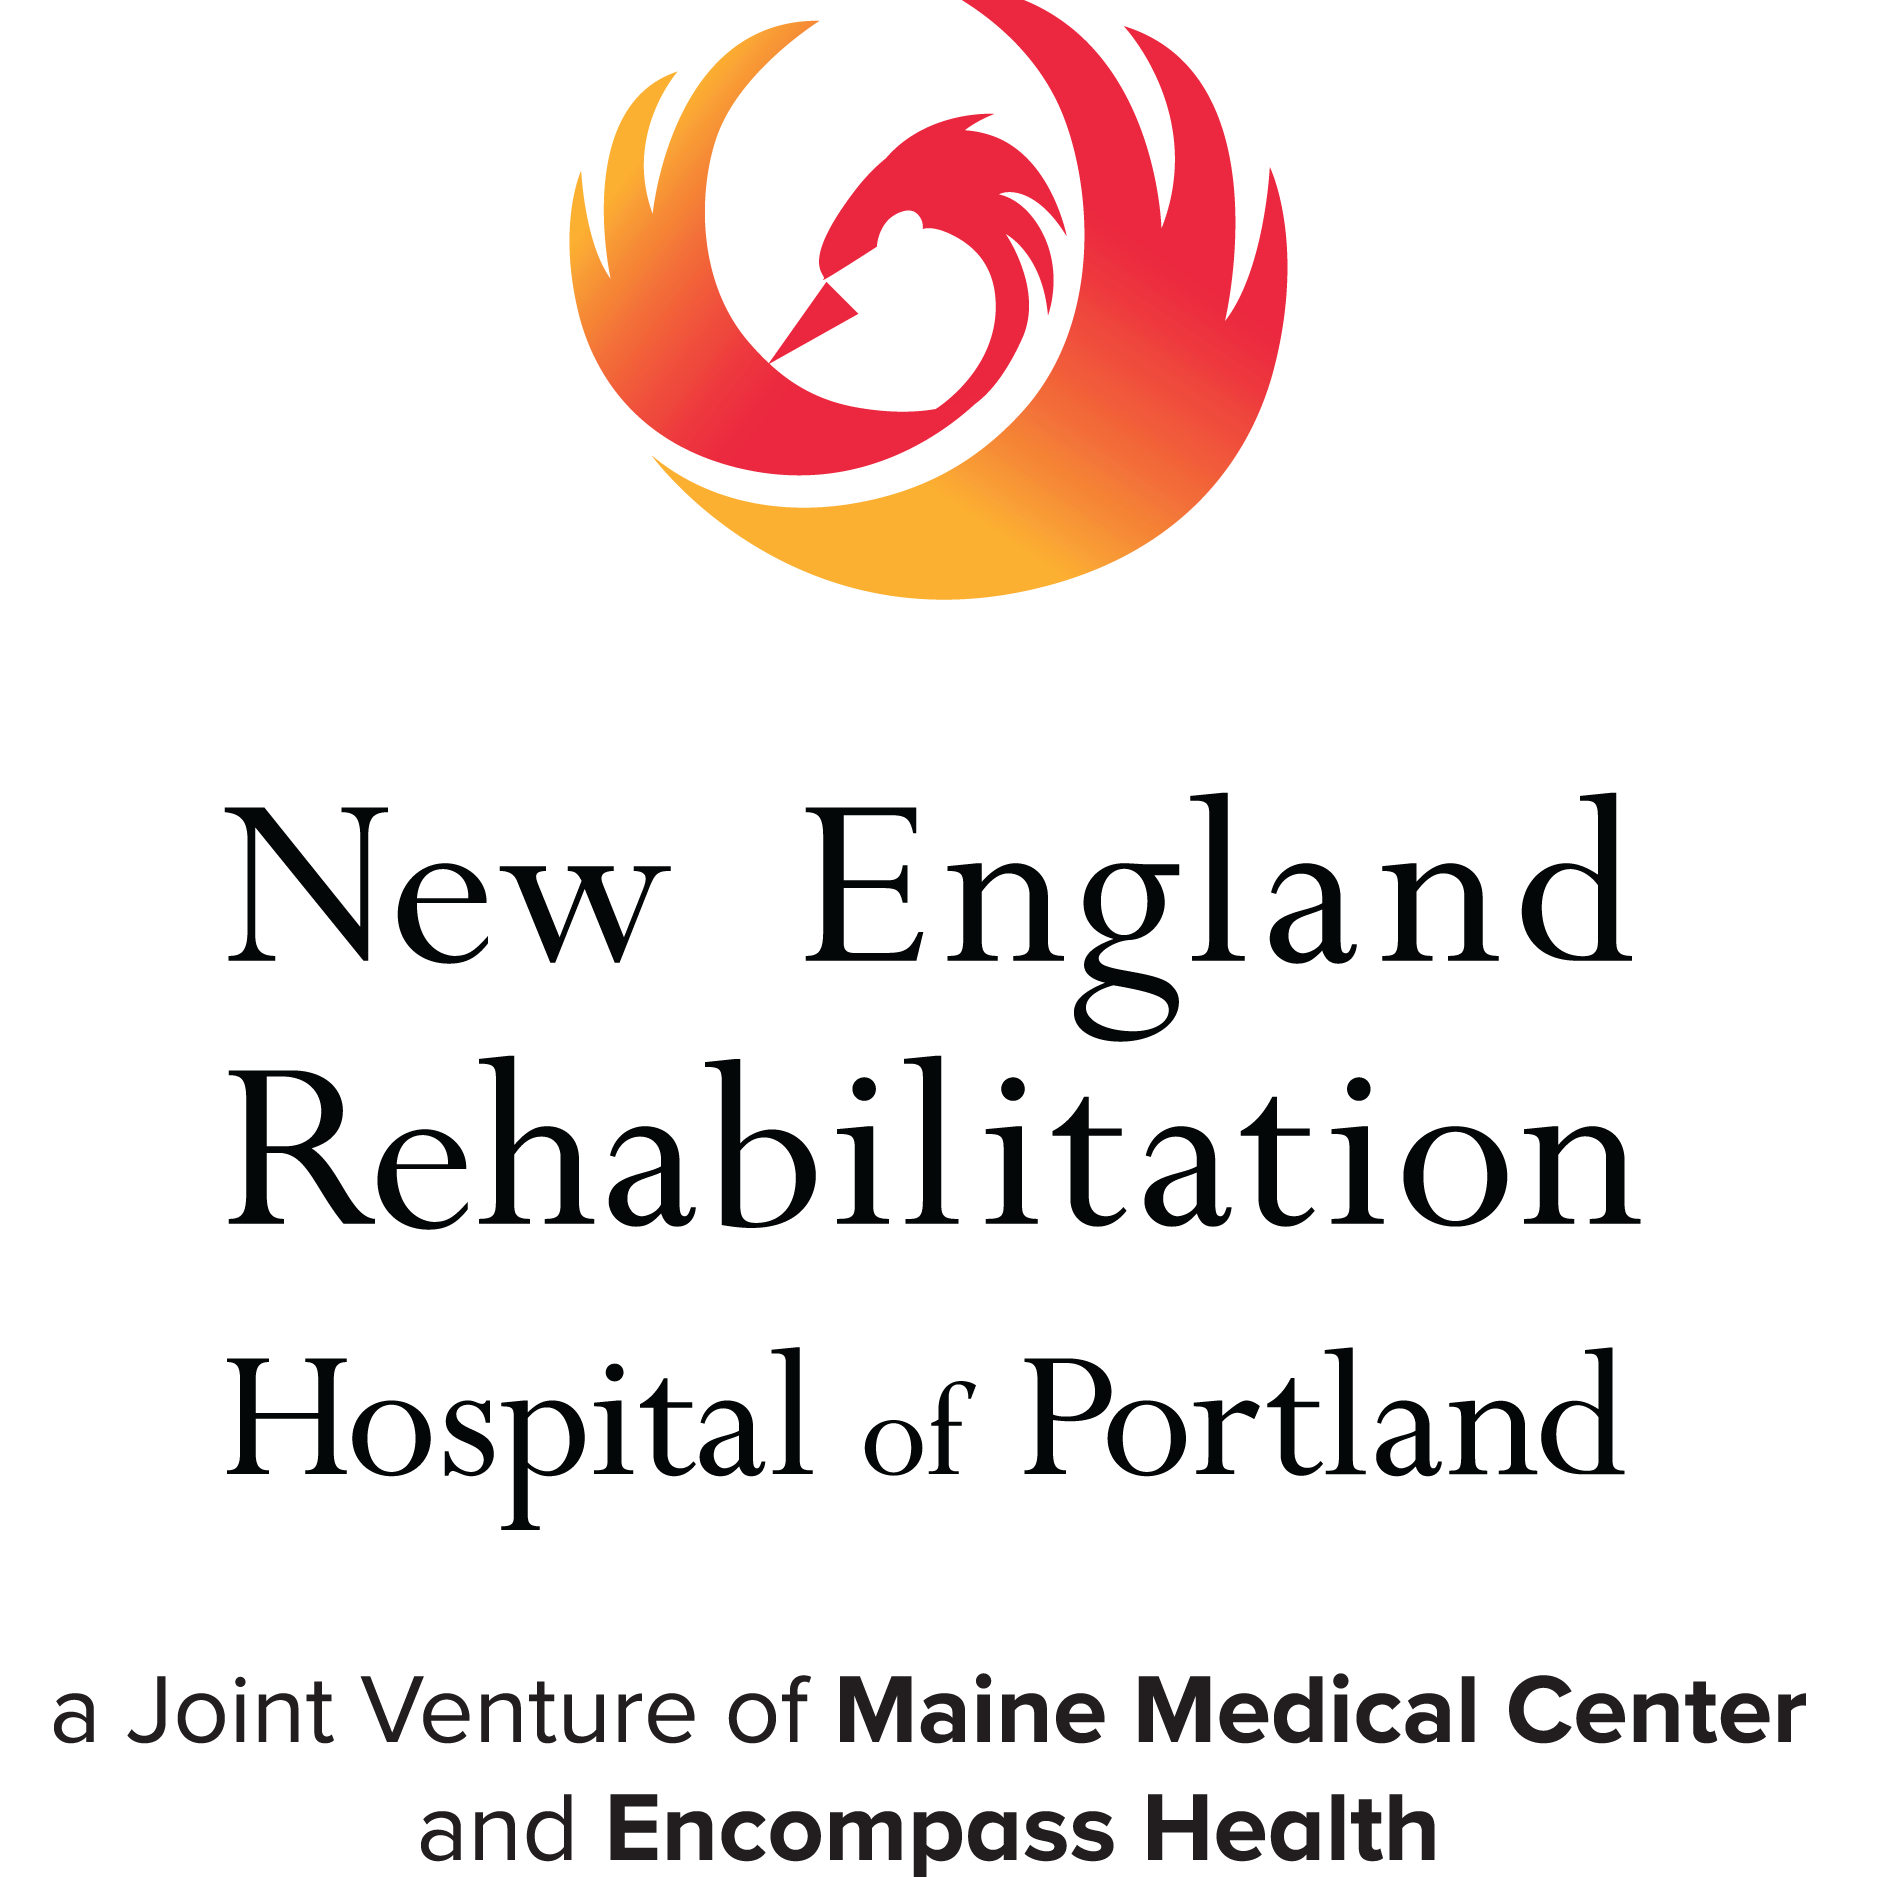 New England Rehabilitation Hospital of Portland